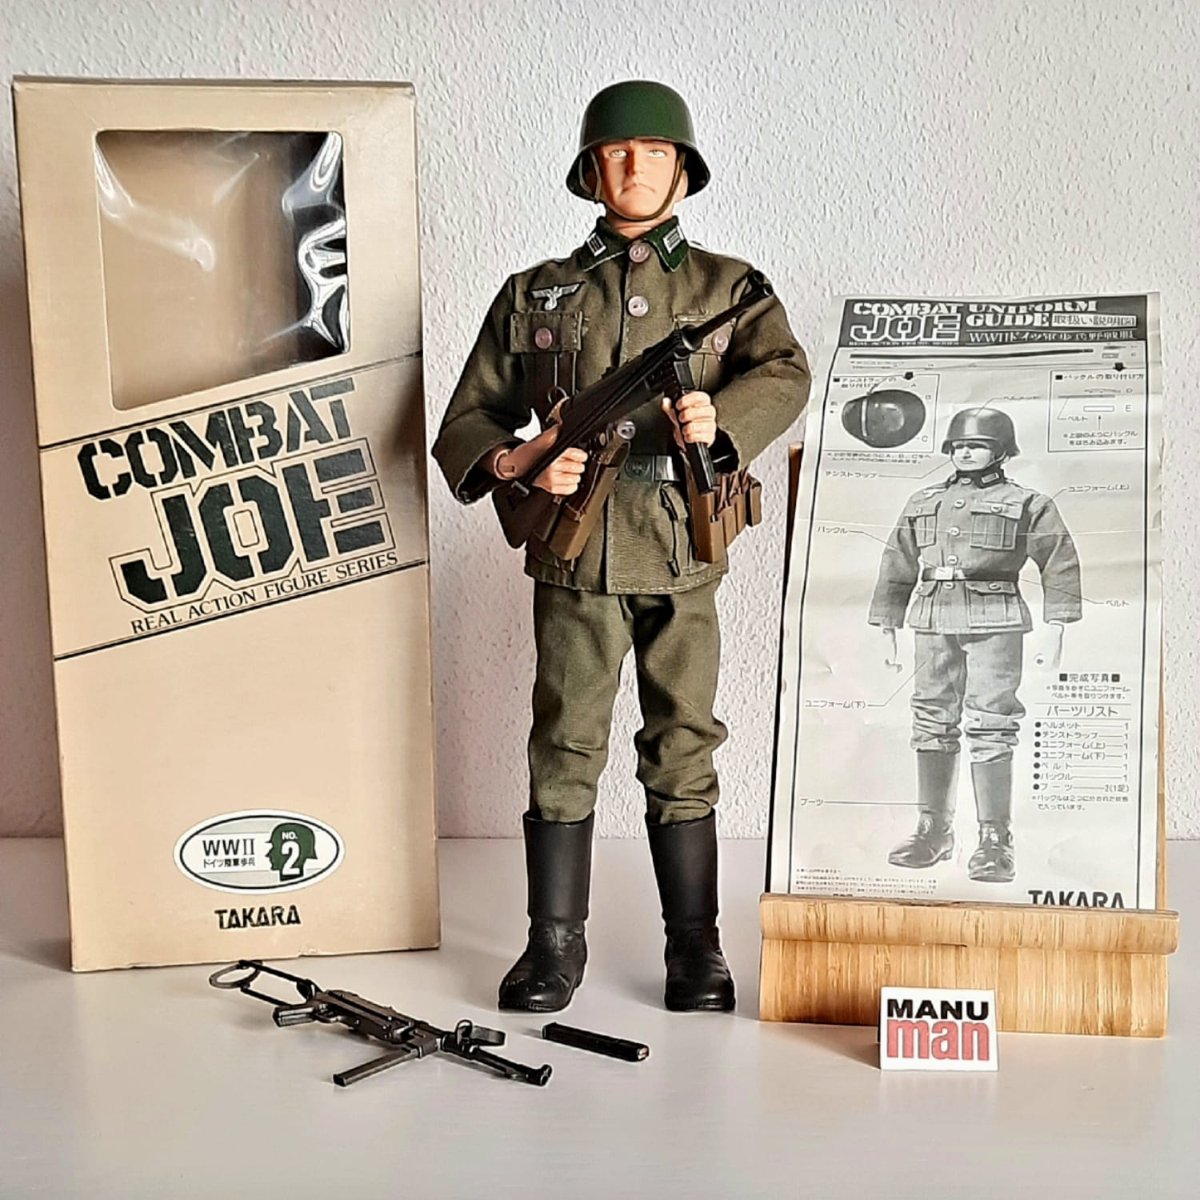 Combat Joe Soldado Aleman.jpeg